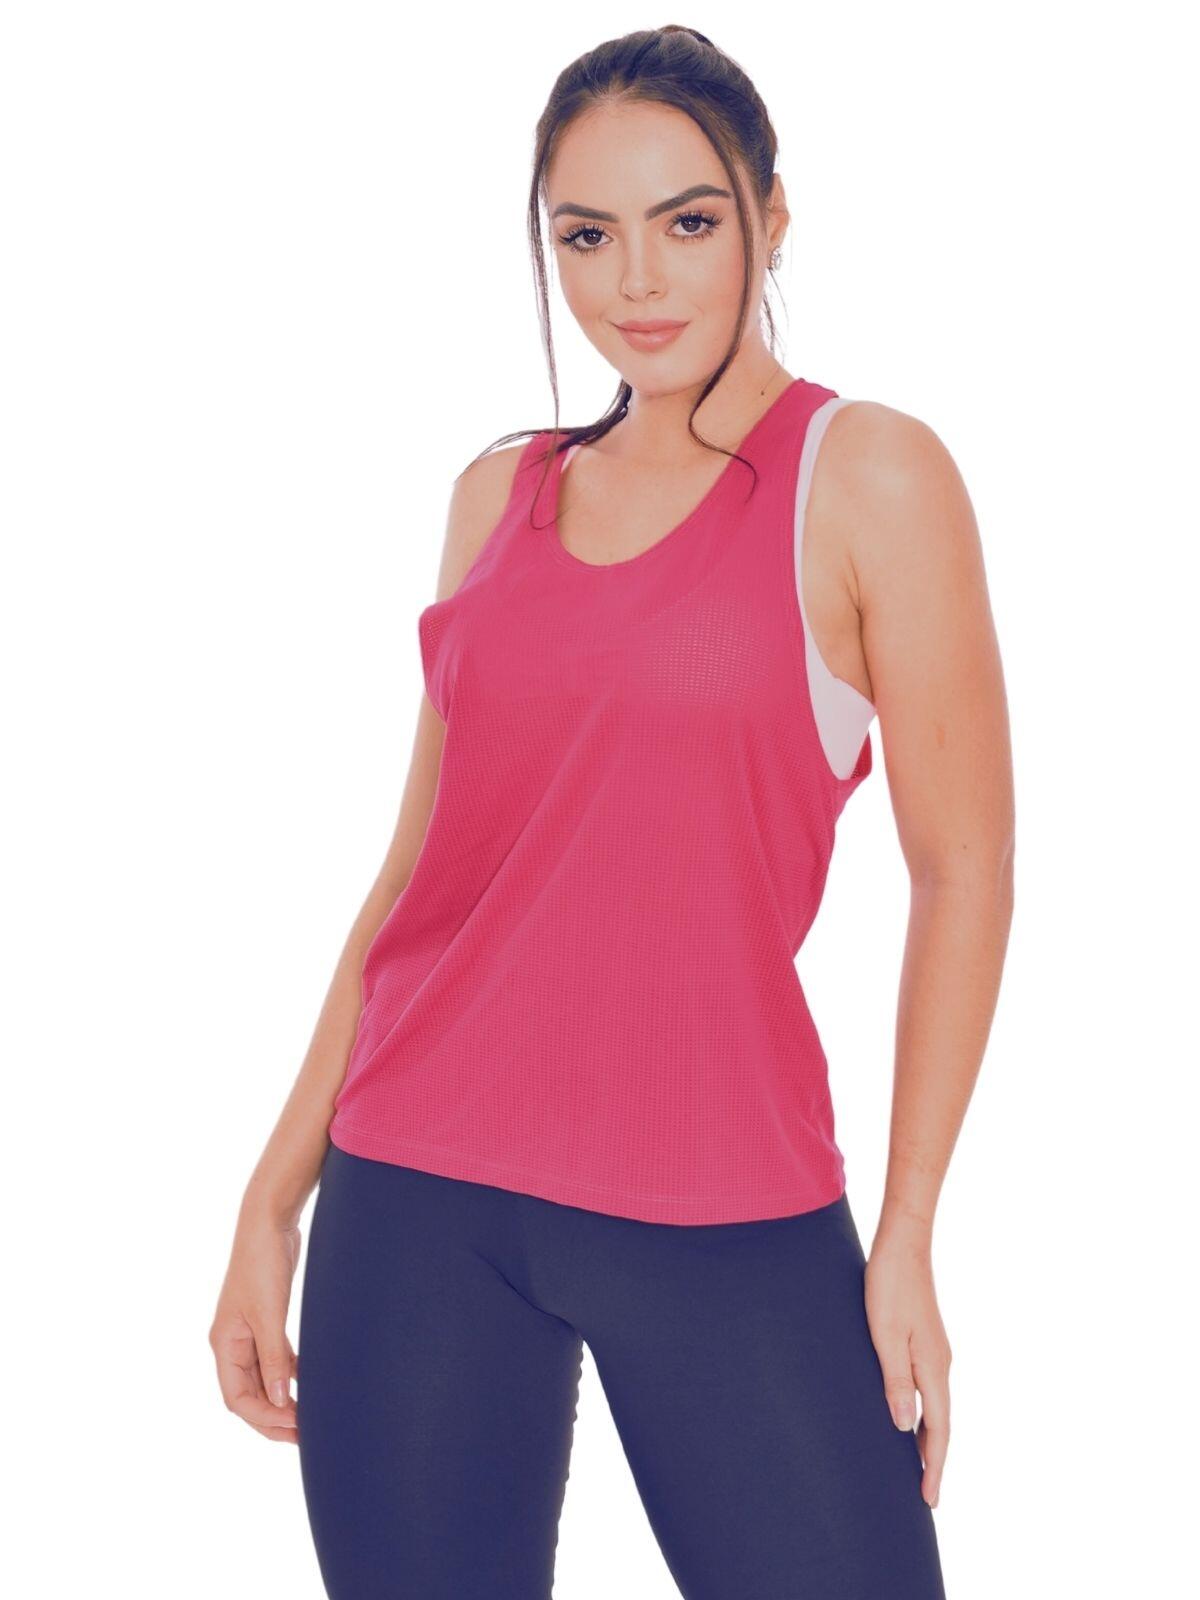 Camiseta feminina de academia dry fit treino crossfit musculação